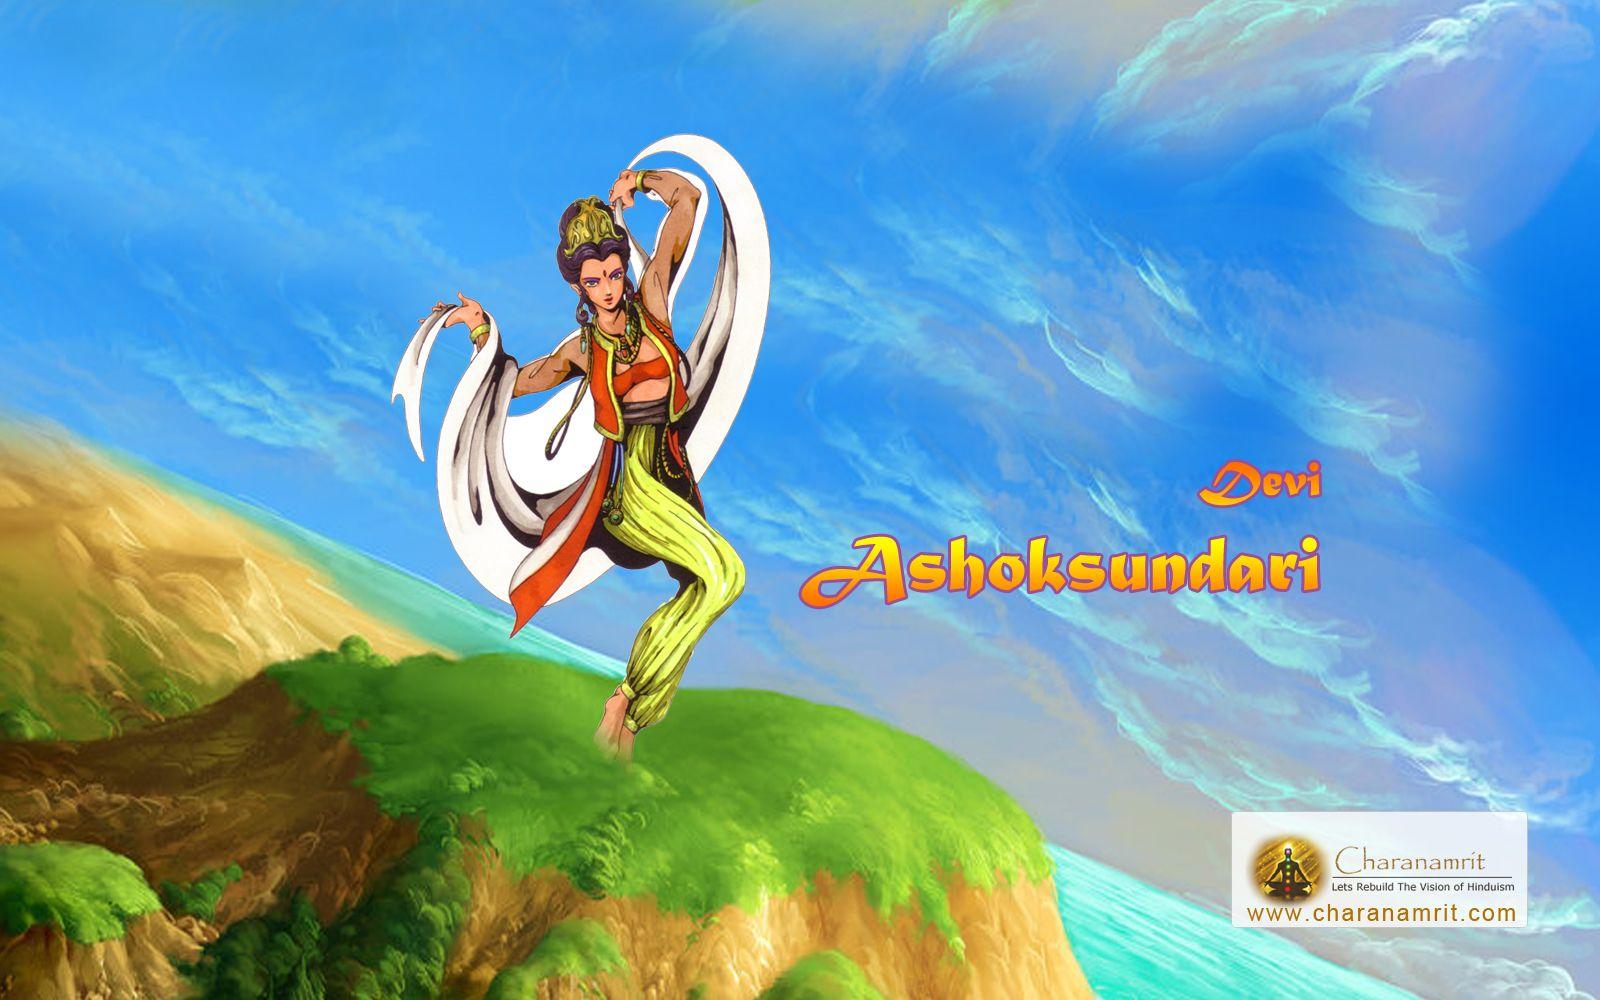 Goddess Sri Ashok Sundari devi colorful HD Wallpaper for free